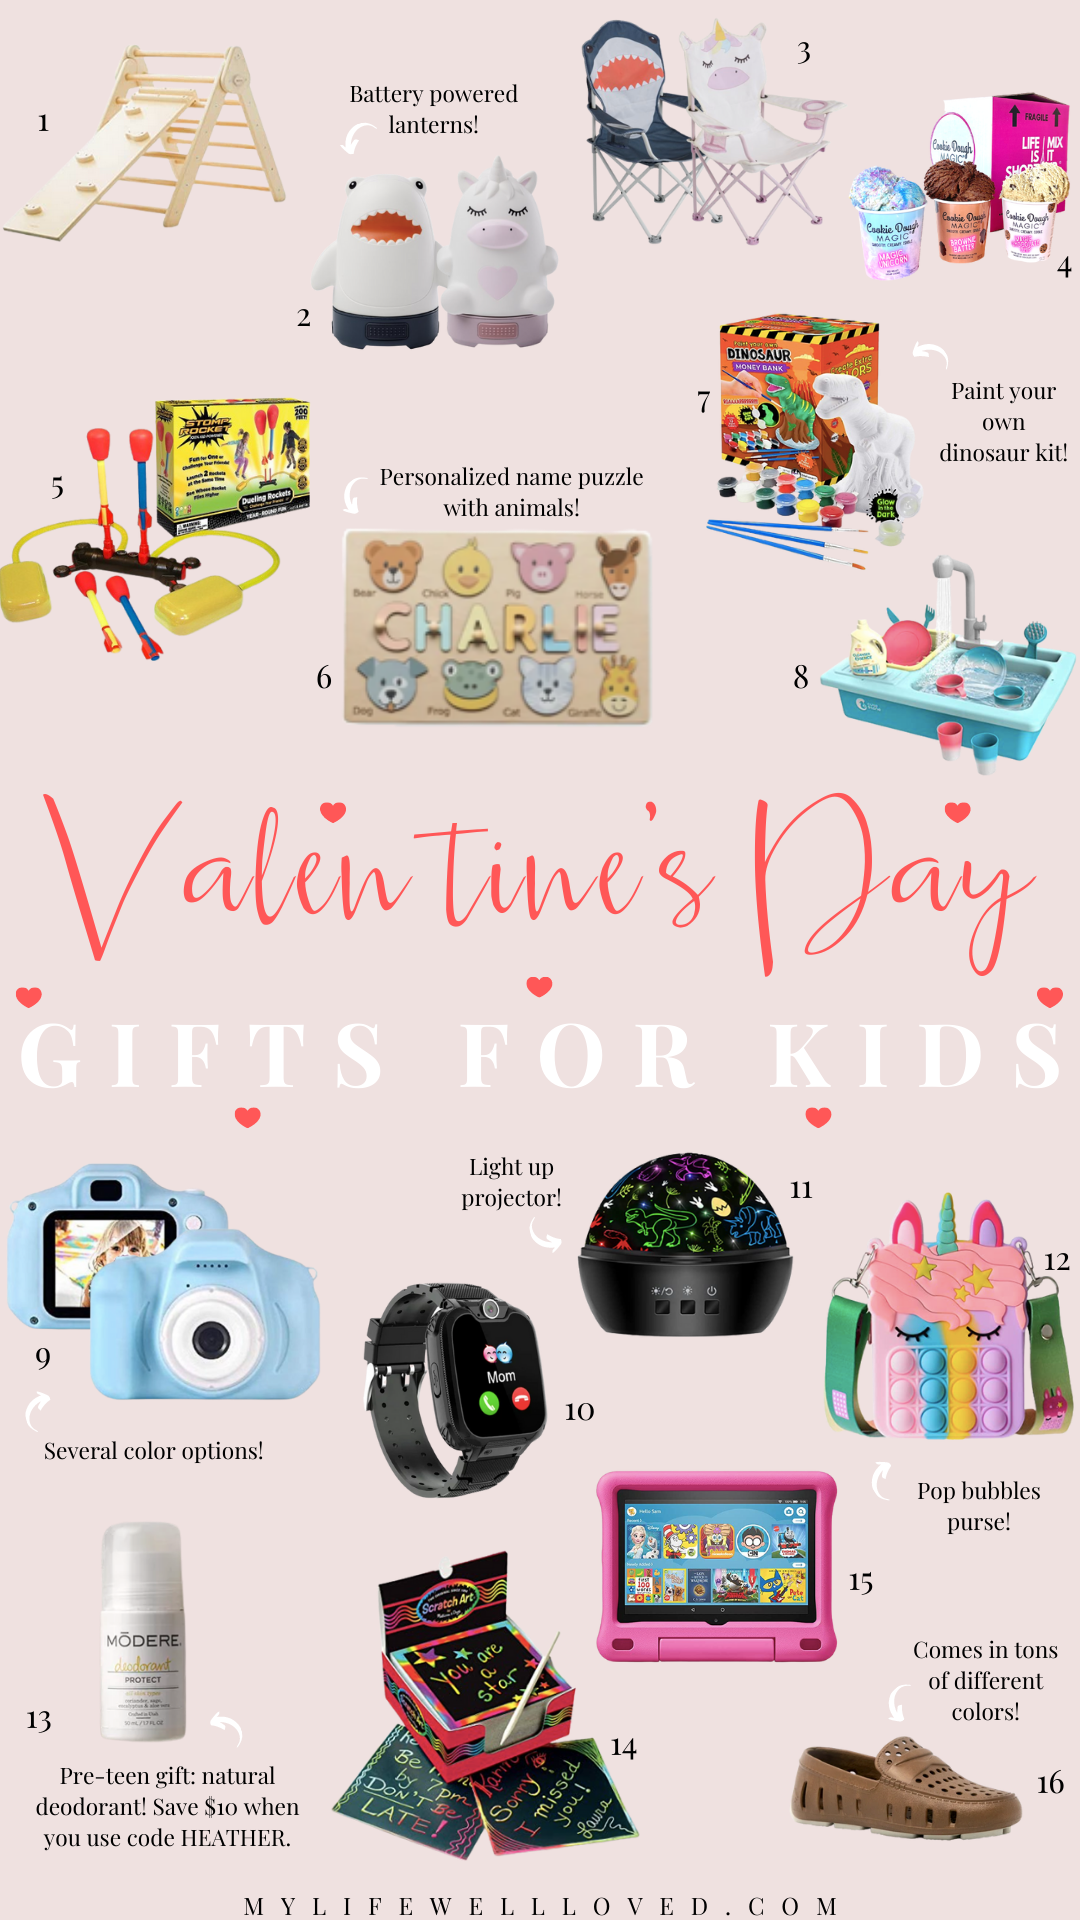 Valentine's Day Gifts Ideas